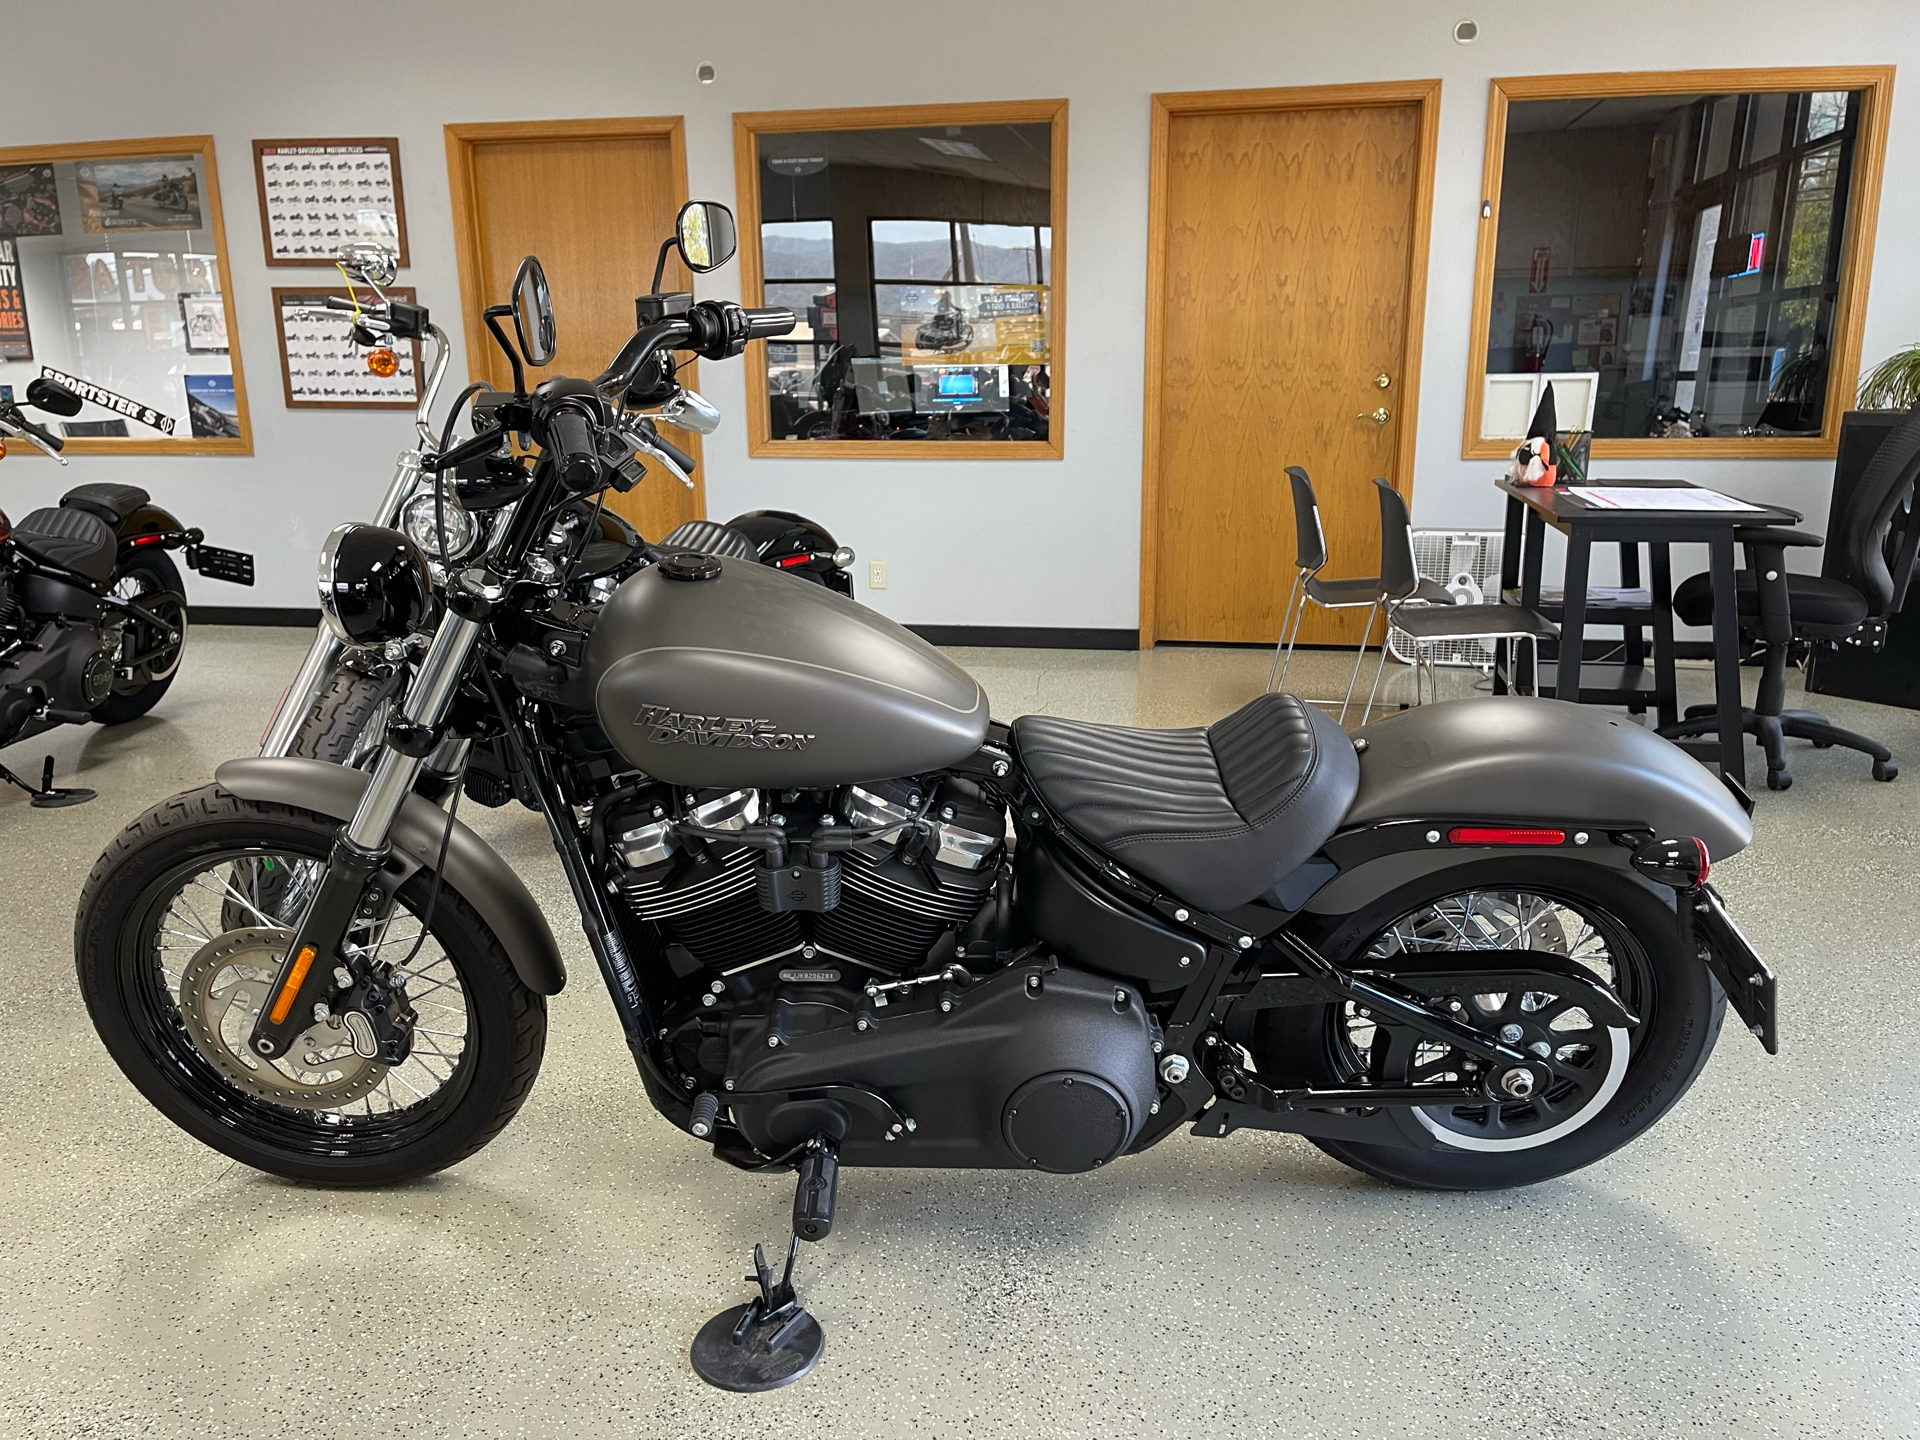 2019 Harley-Davidson Street Bob® in Ukiah, California - Photo 2